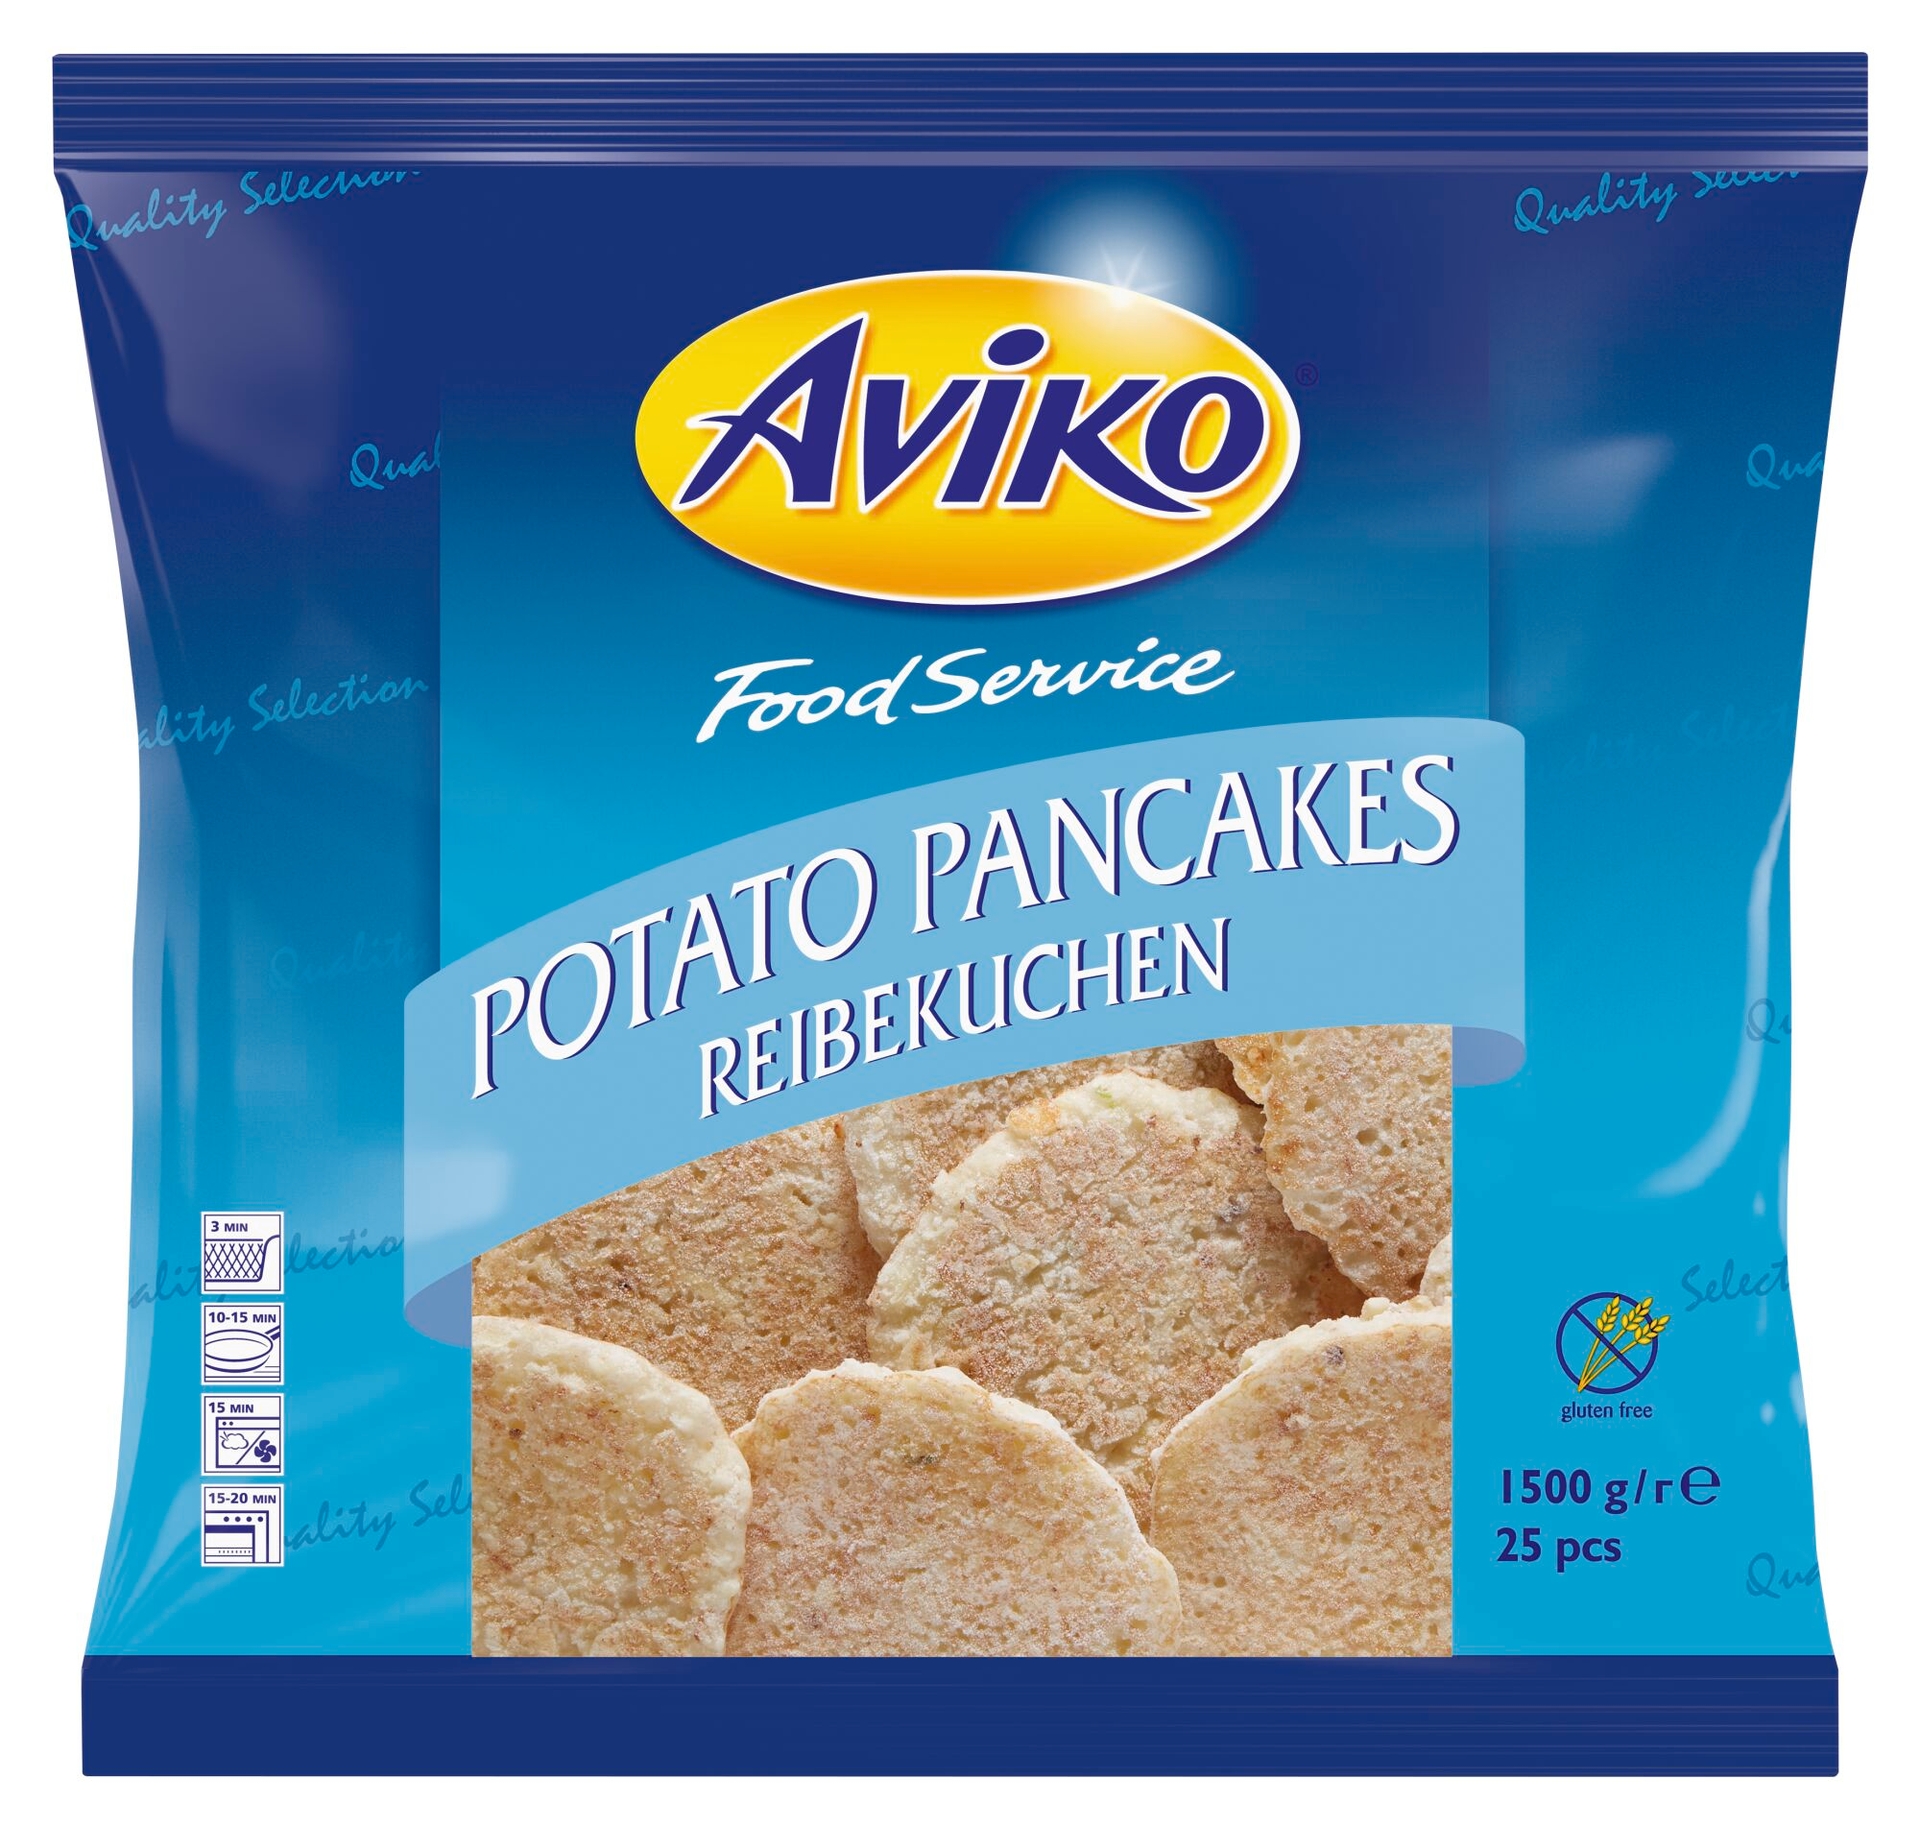 aviko-reibekuchen-pancakes-1500g.jpg